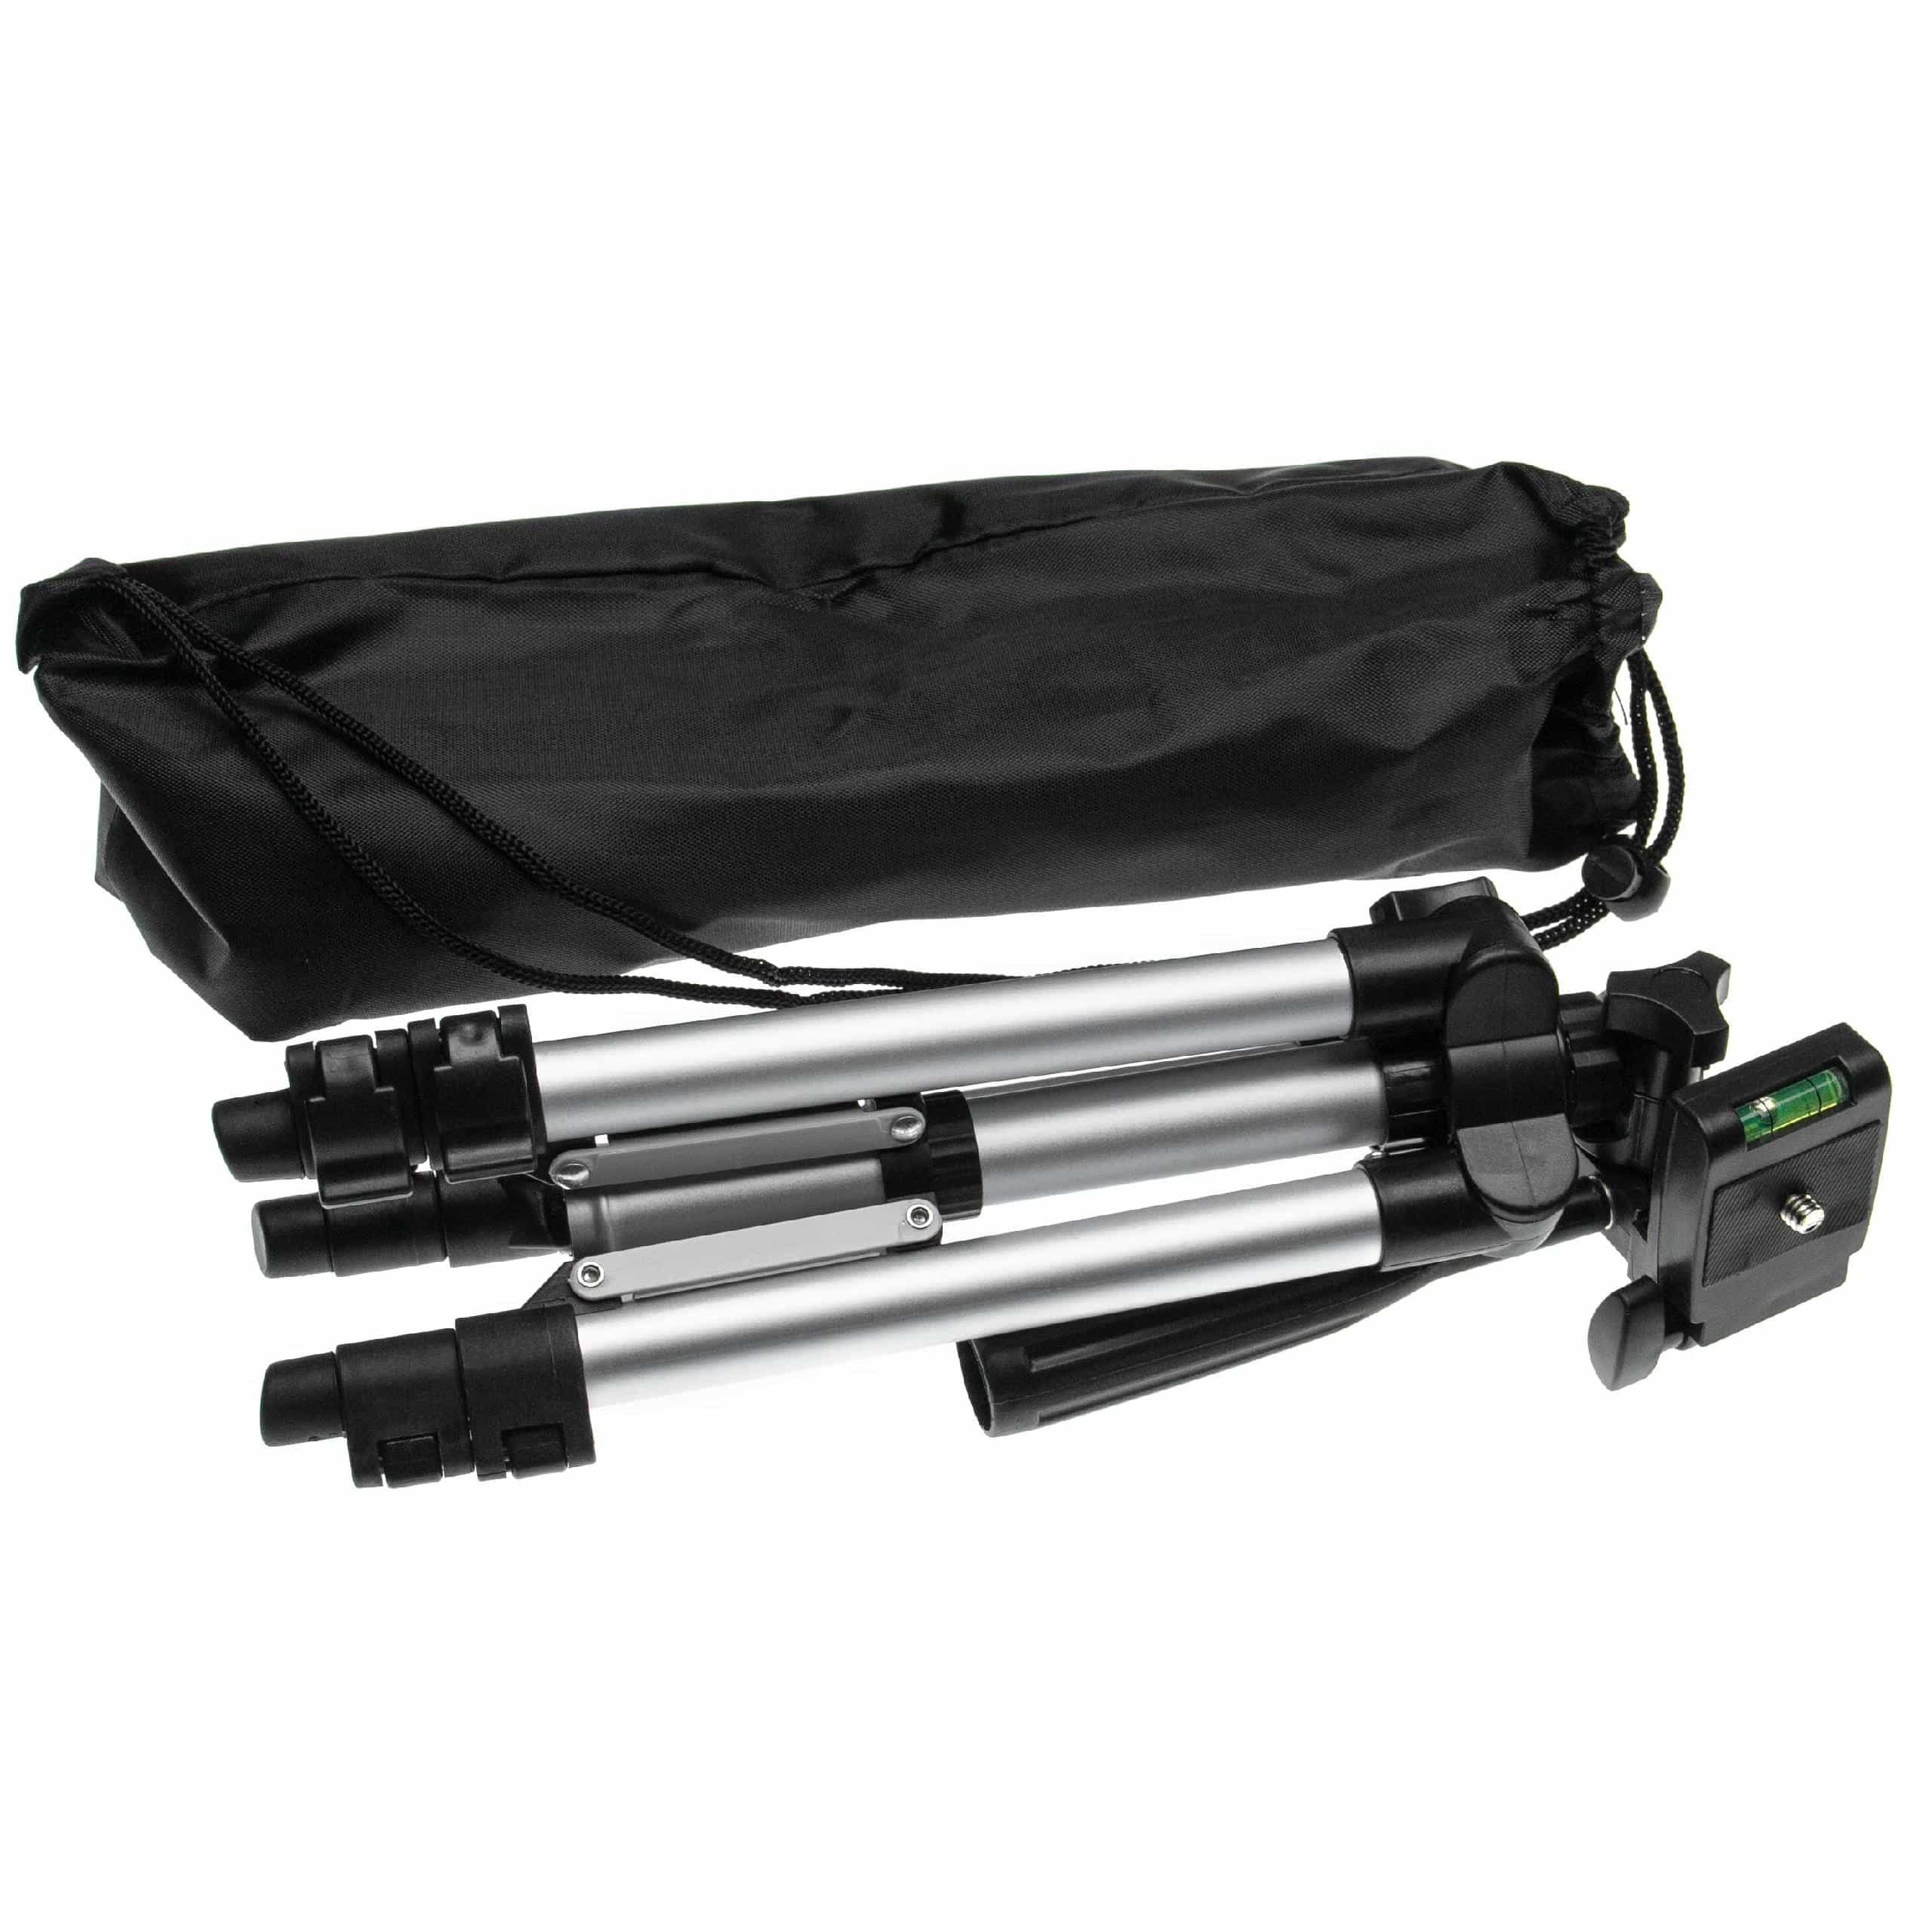 Camera Tripod, Photography Tripod suitable for Camera - Incl. Storage Case, 30 - 65 cm, Max. 2 kg